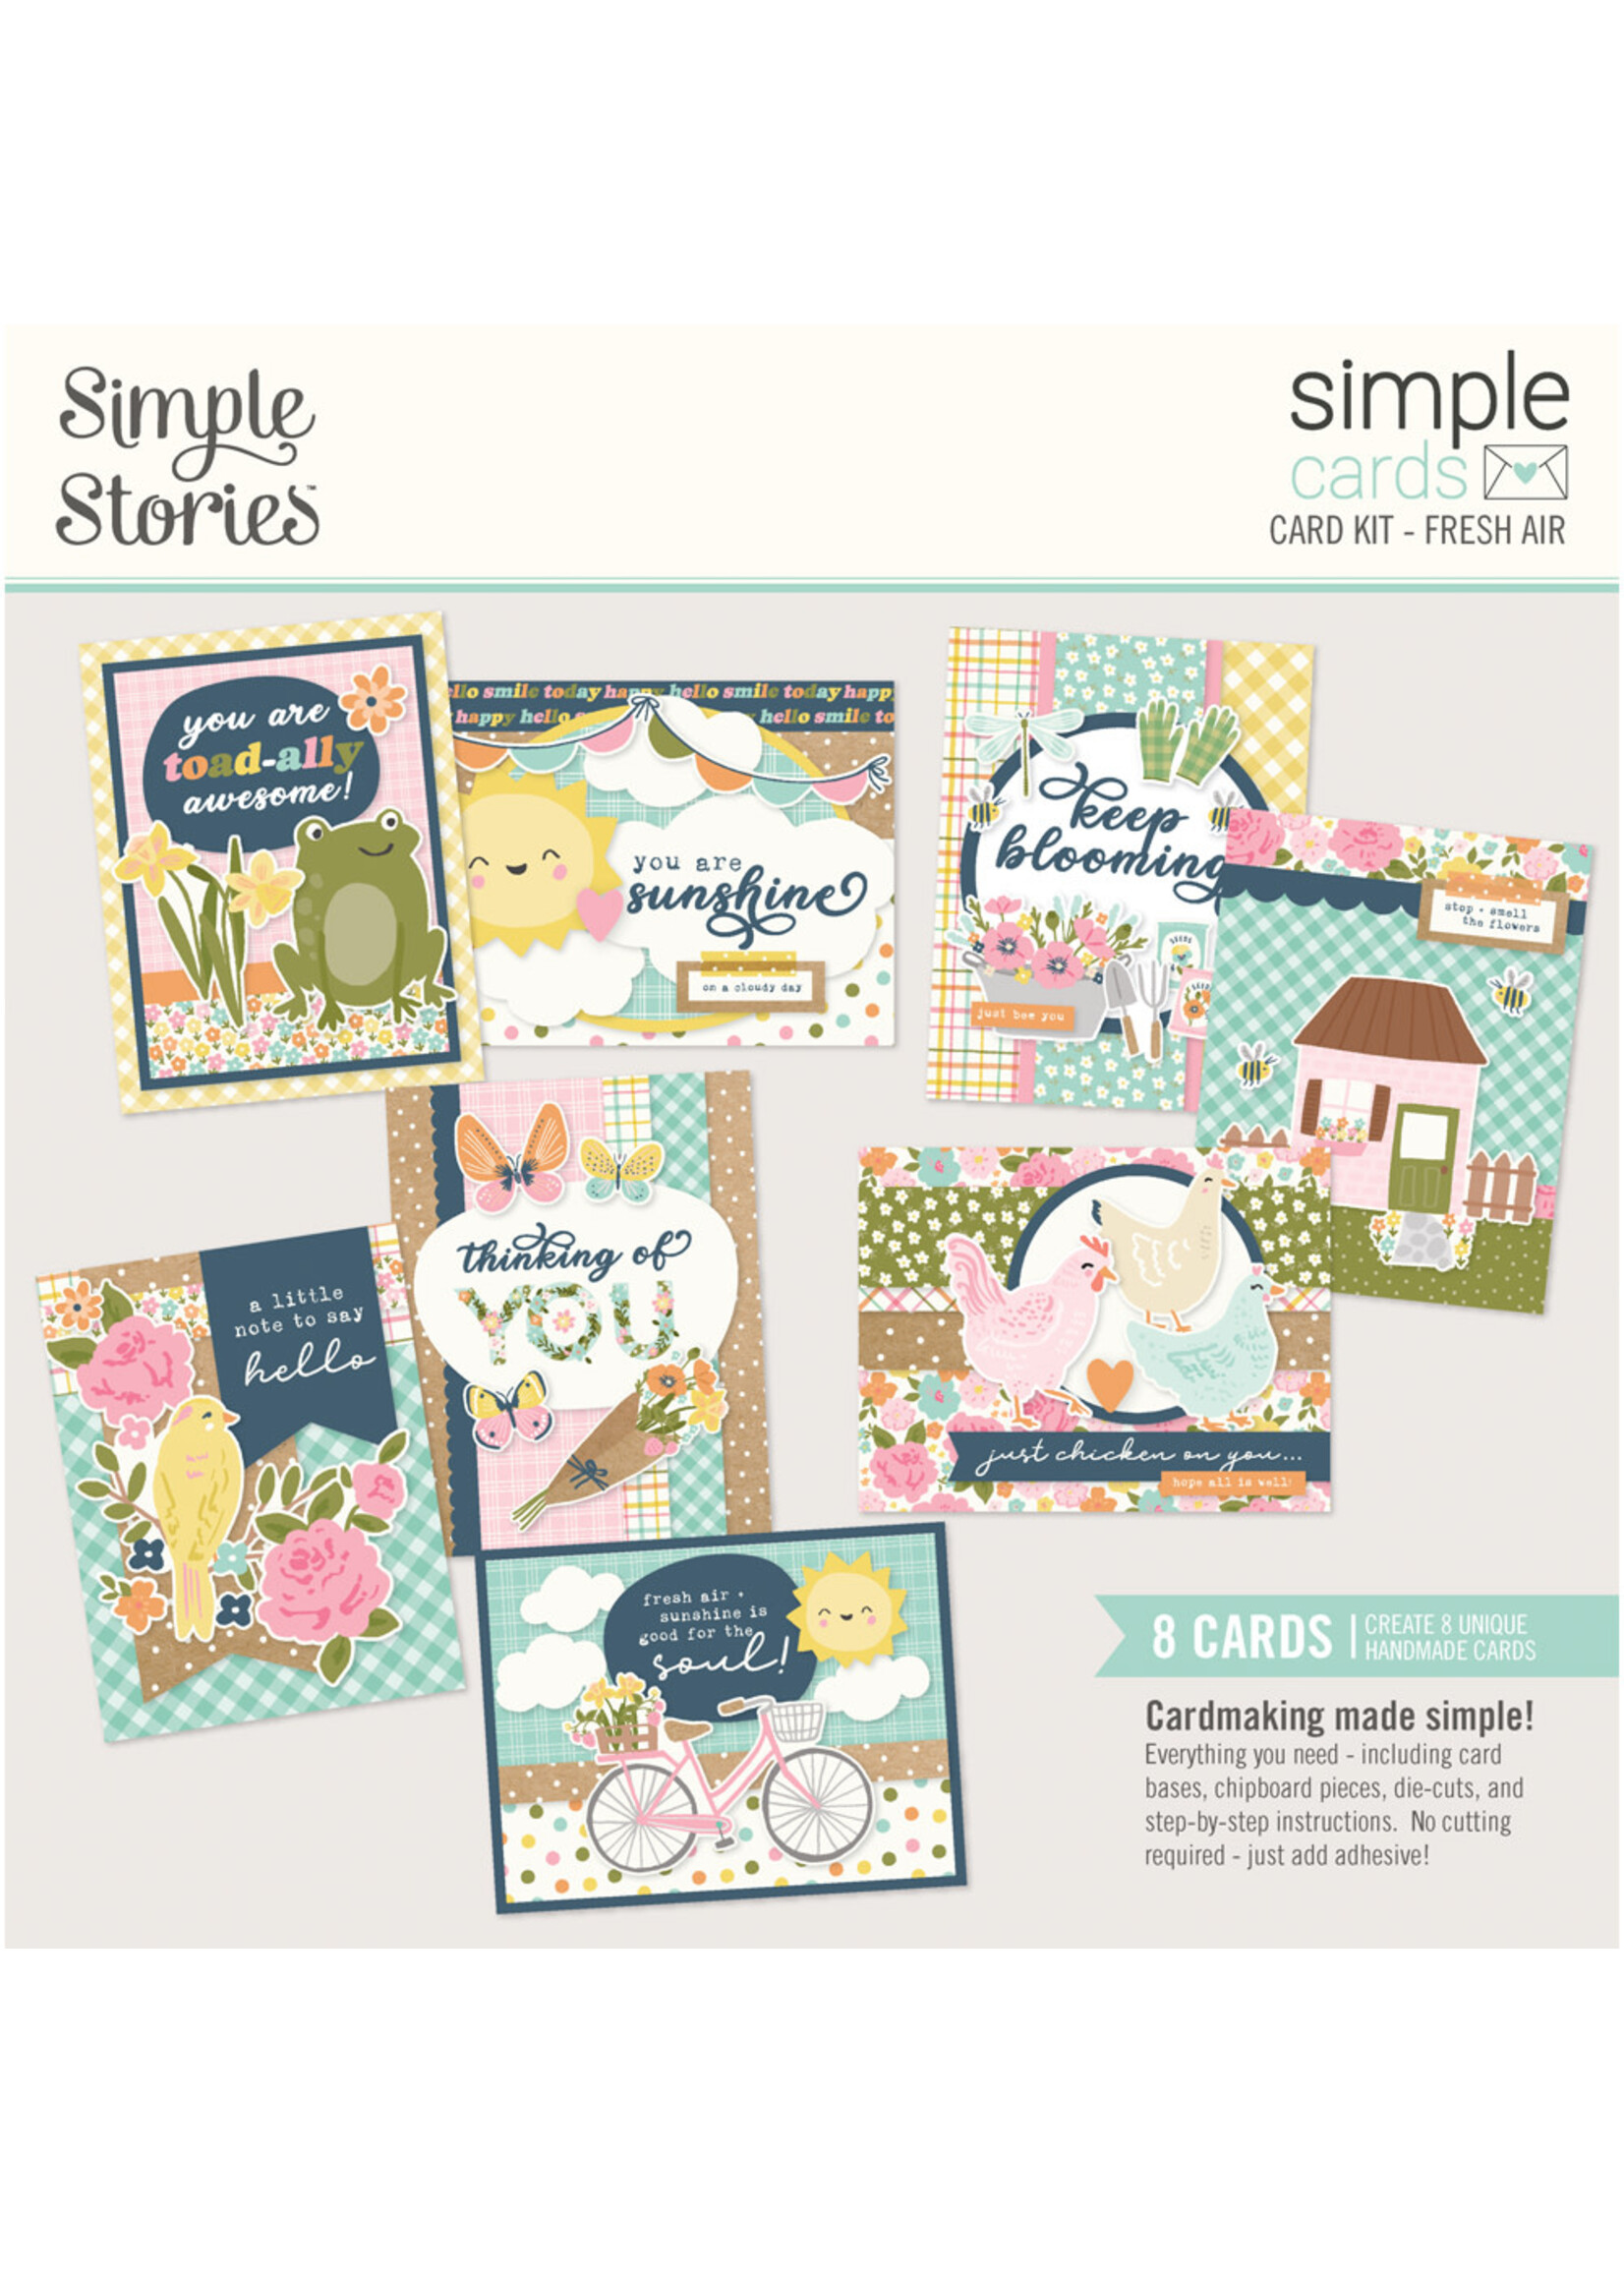 Simple Stories Fresh Air - Simple Cards Card Kit